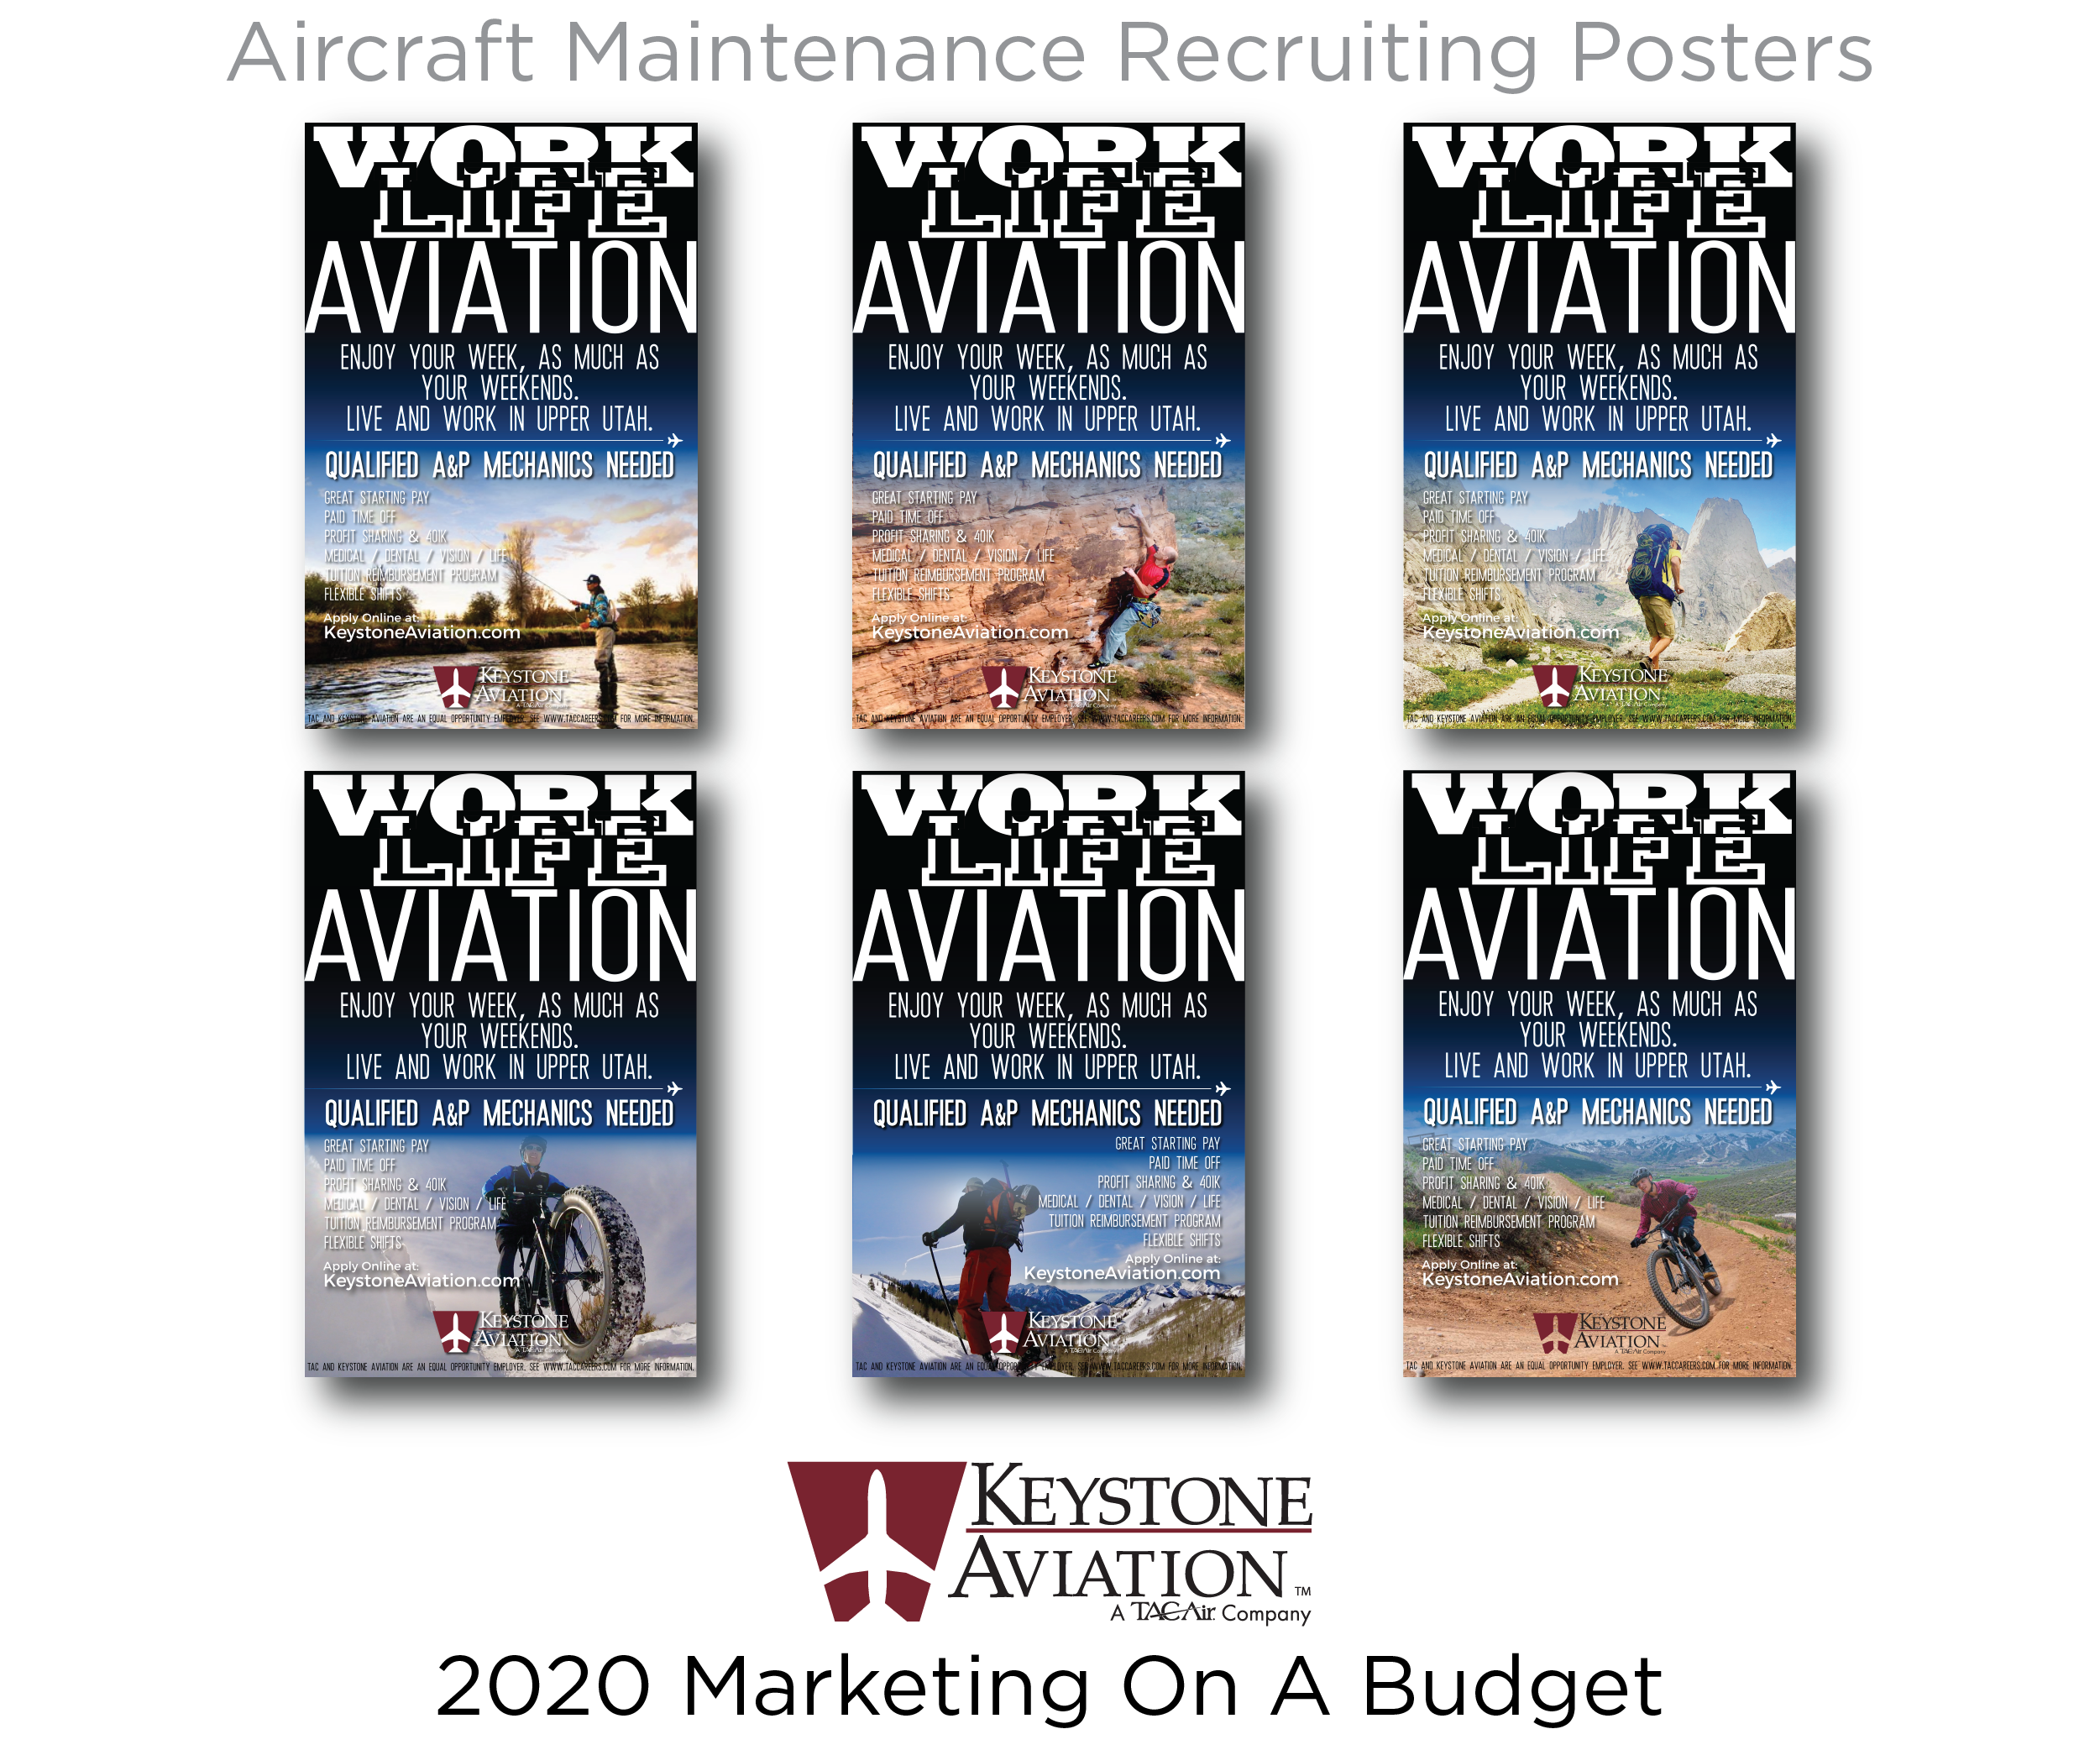 TAC - 2020 AMA Awards Ceremony slides 2020 Marketing On A Budget = Keystone Aviation Recruiting Posters